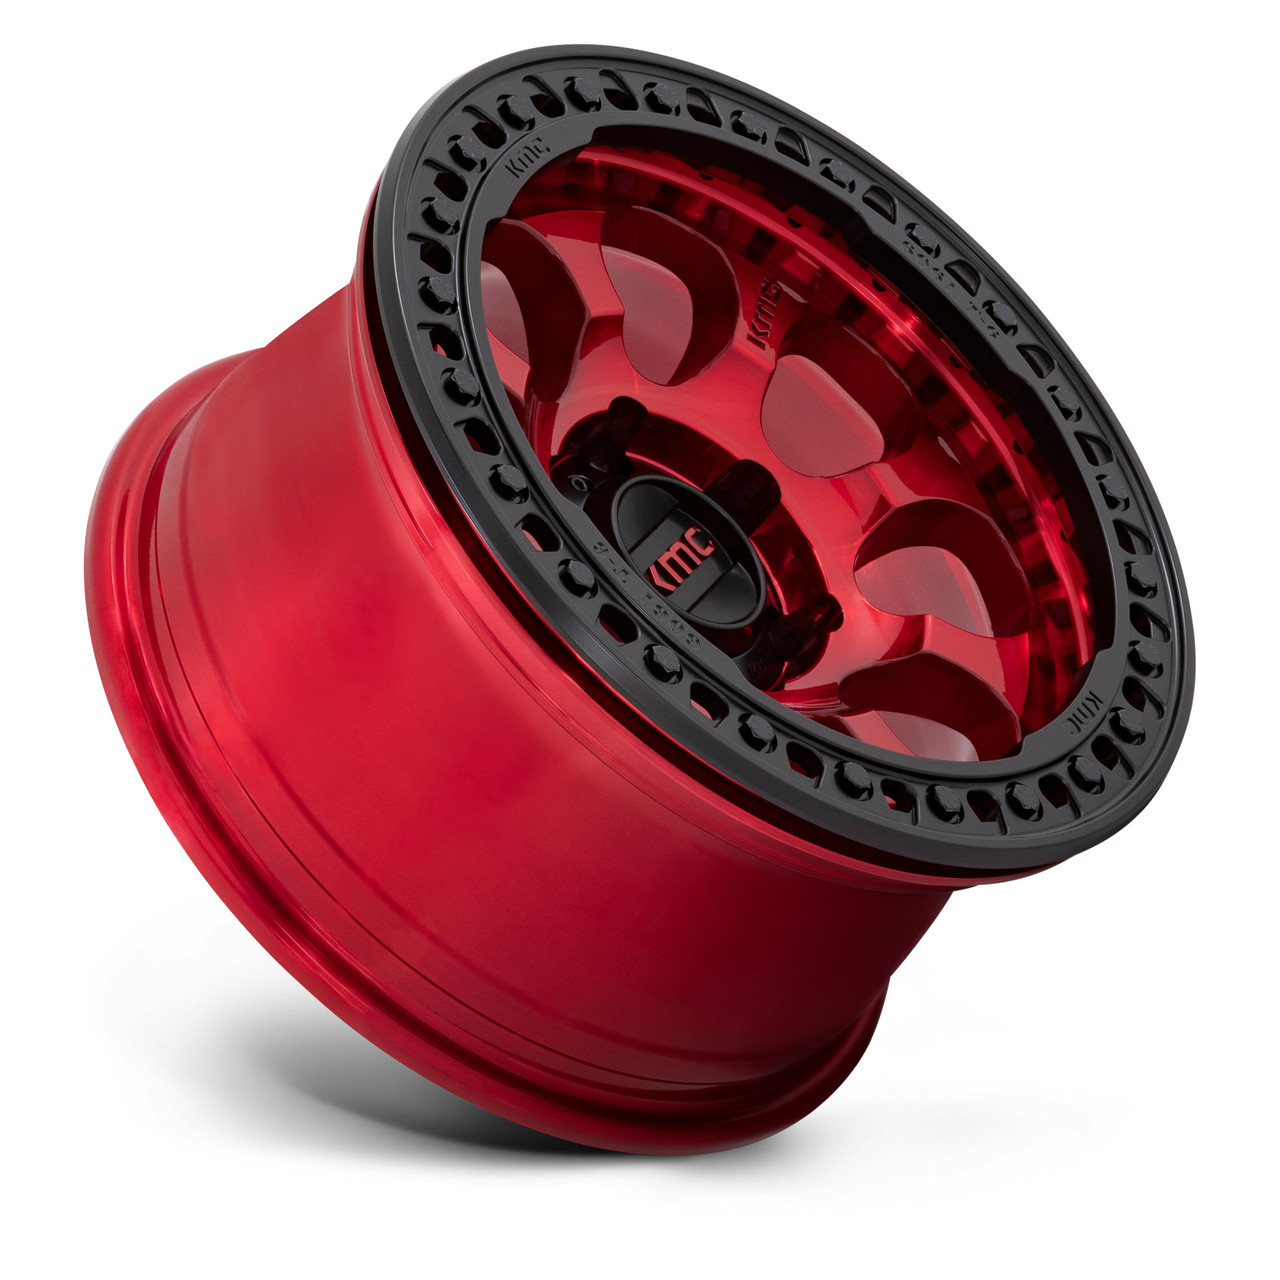 KMC KM237 Riot Beadlock 17x8.5 6x5.5 Candy Red With Black Ring Wheel 17" 0mm Rim